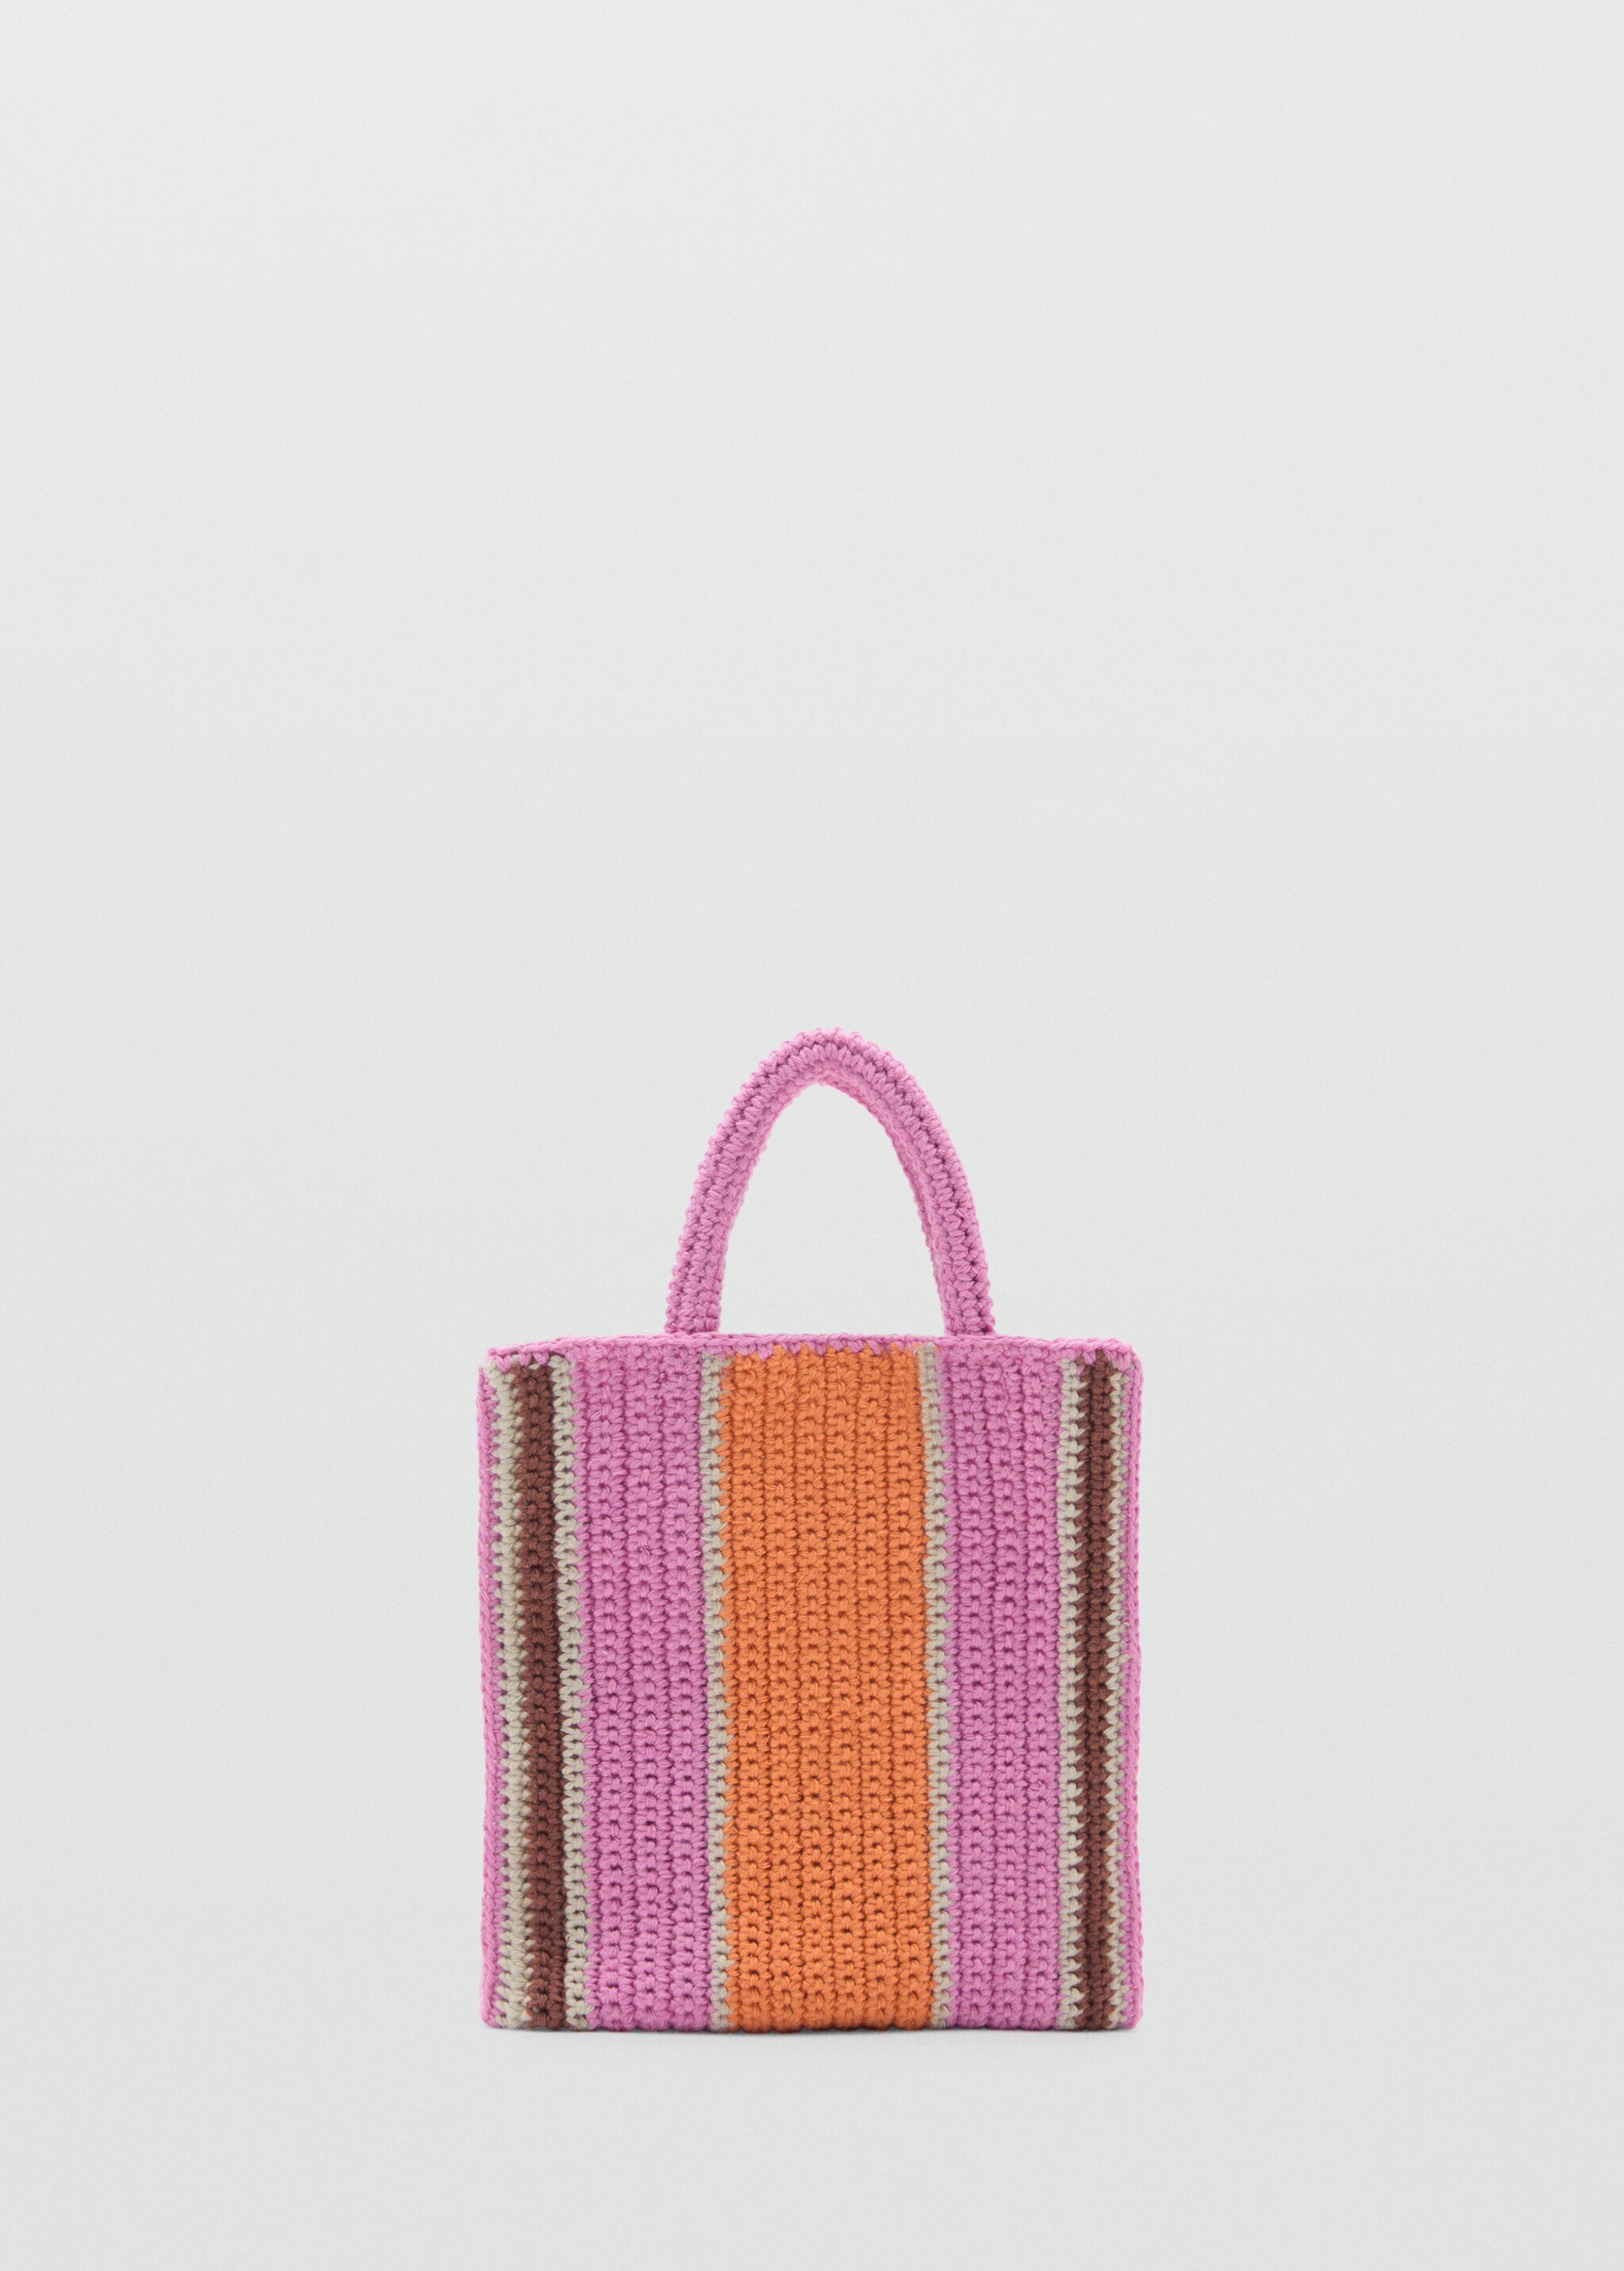 Crochet shopper bag - Article without model